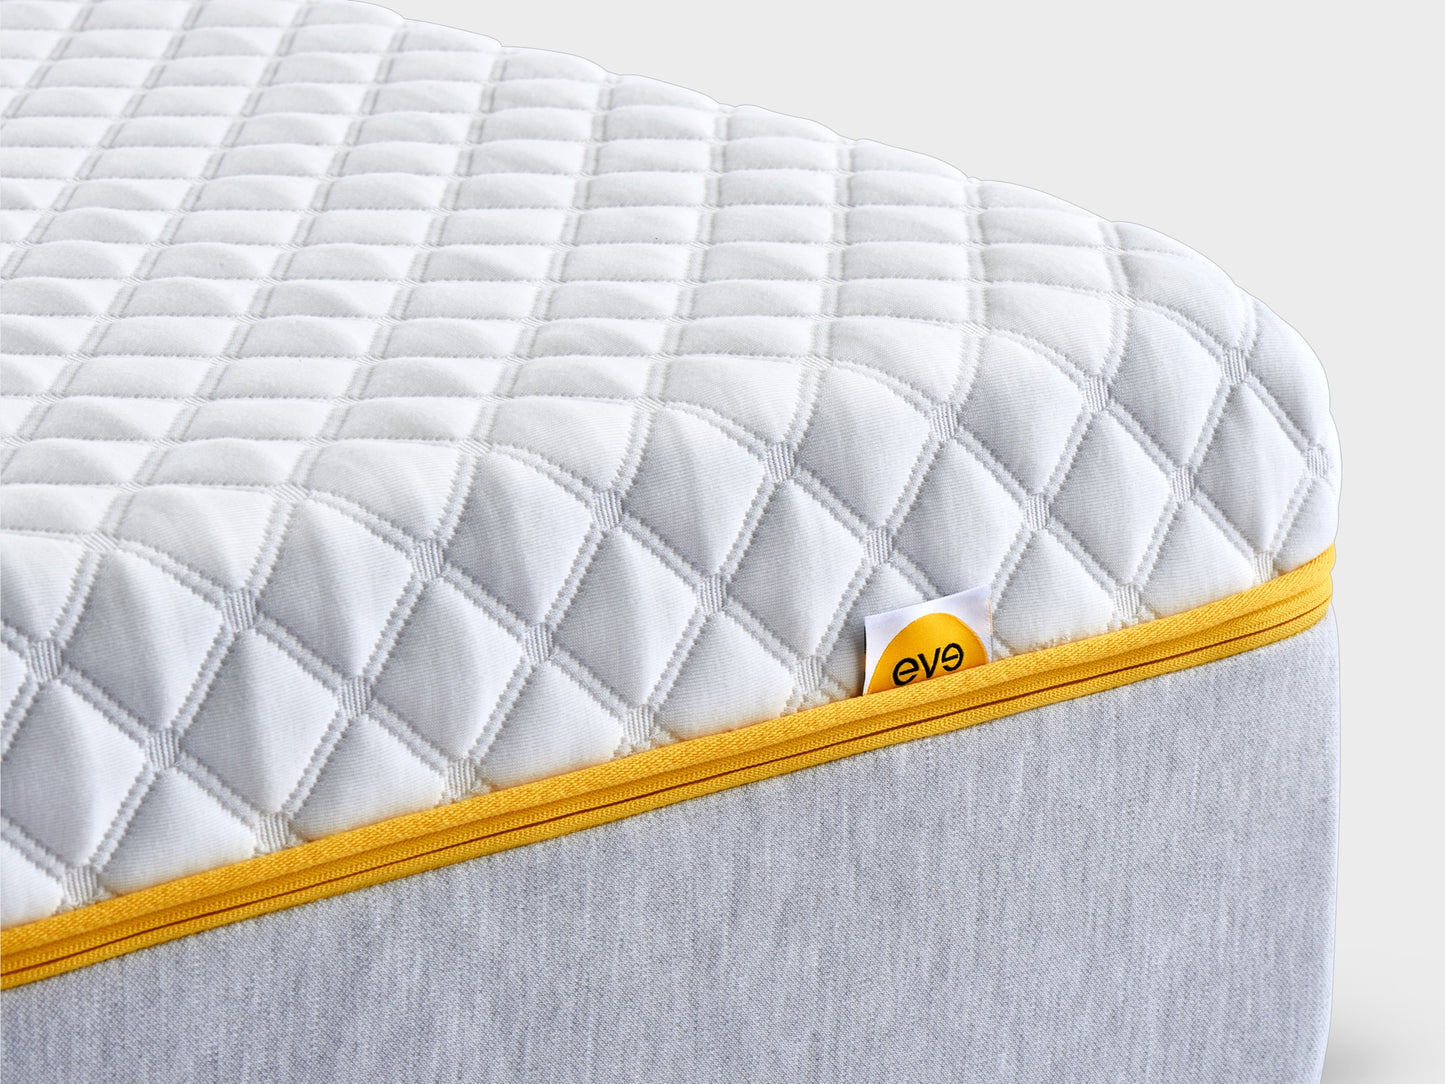 the premium hybrid mattress